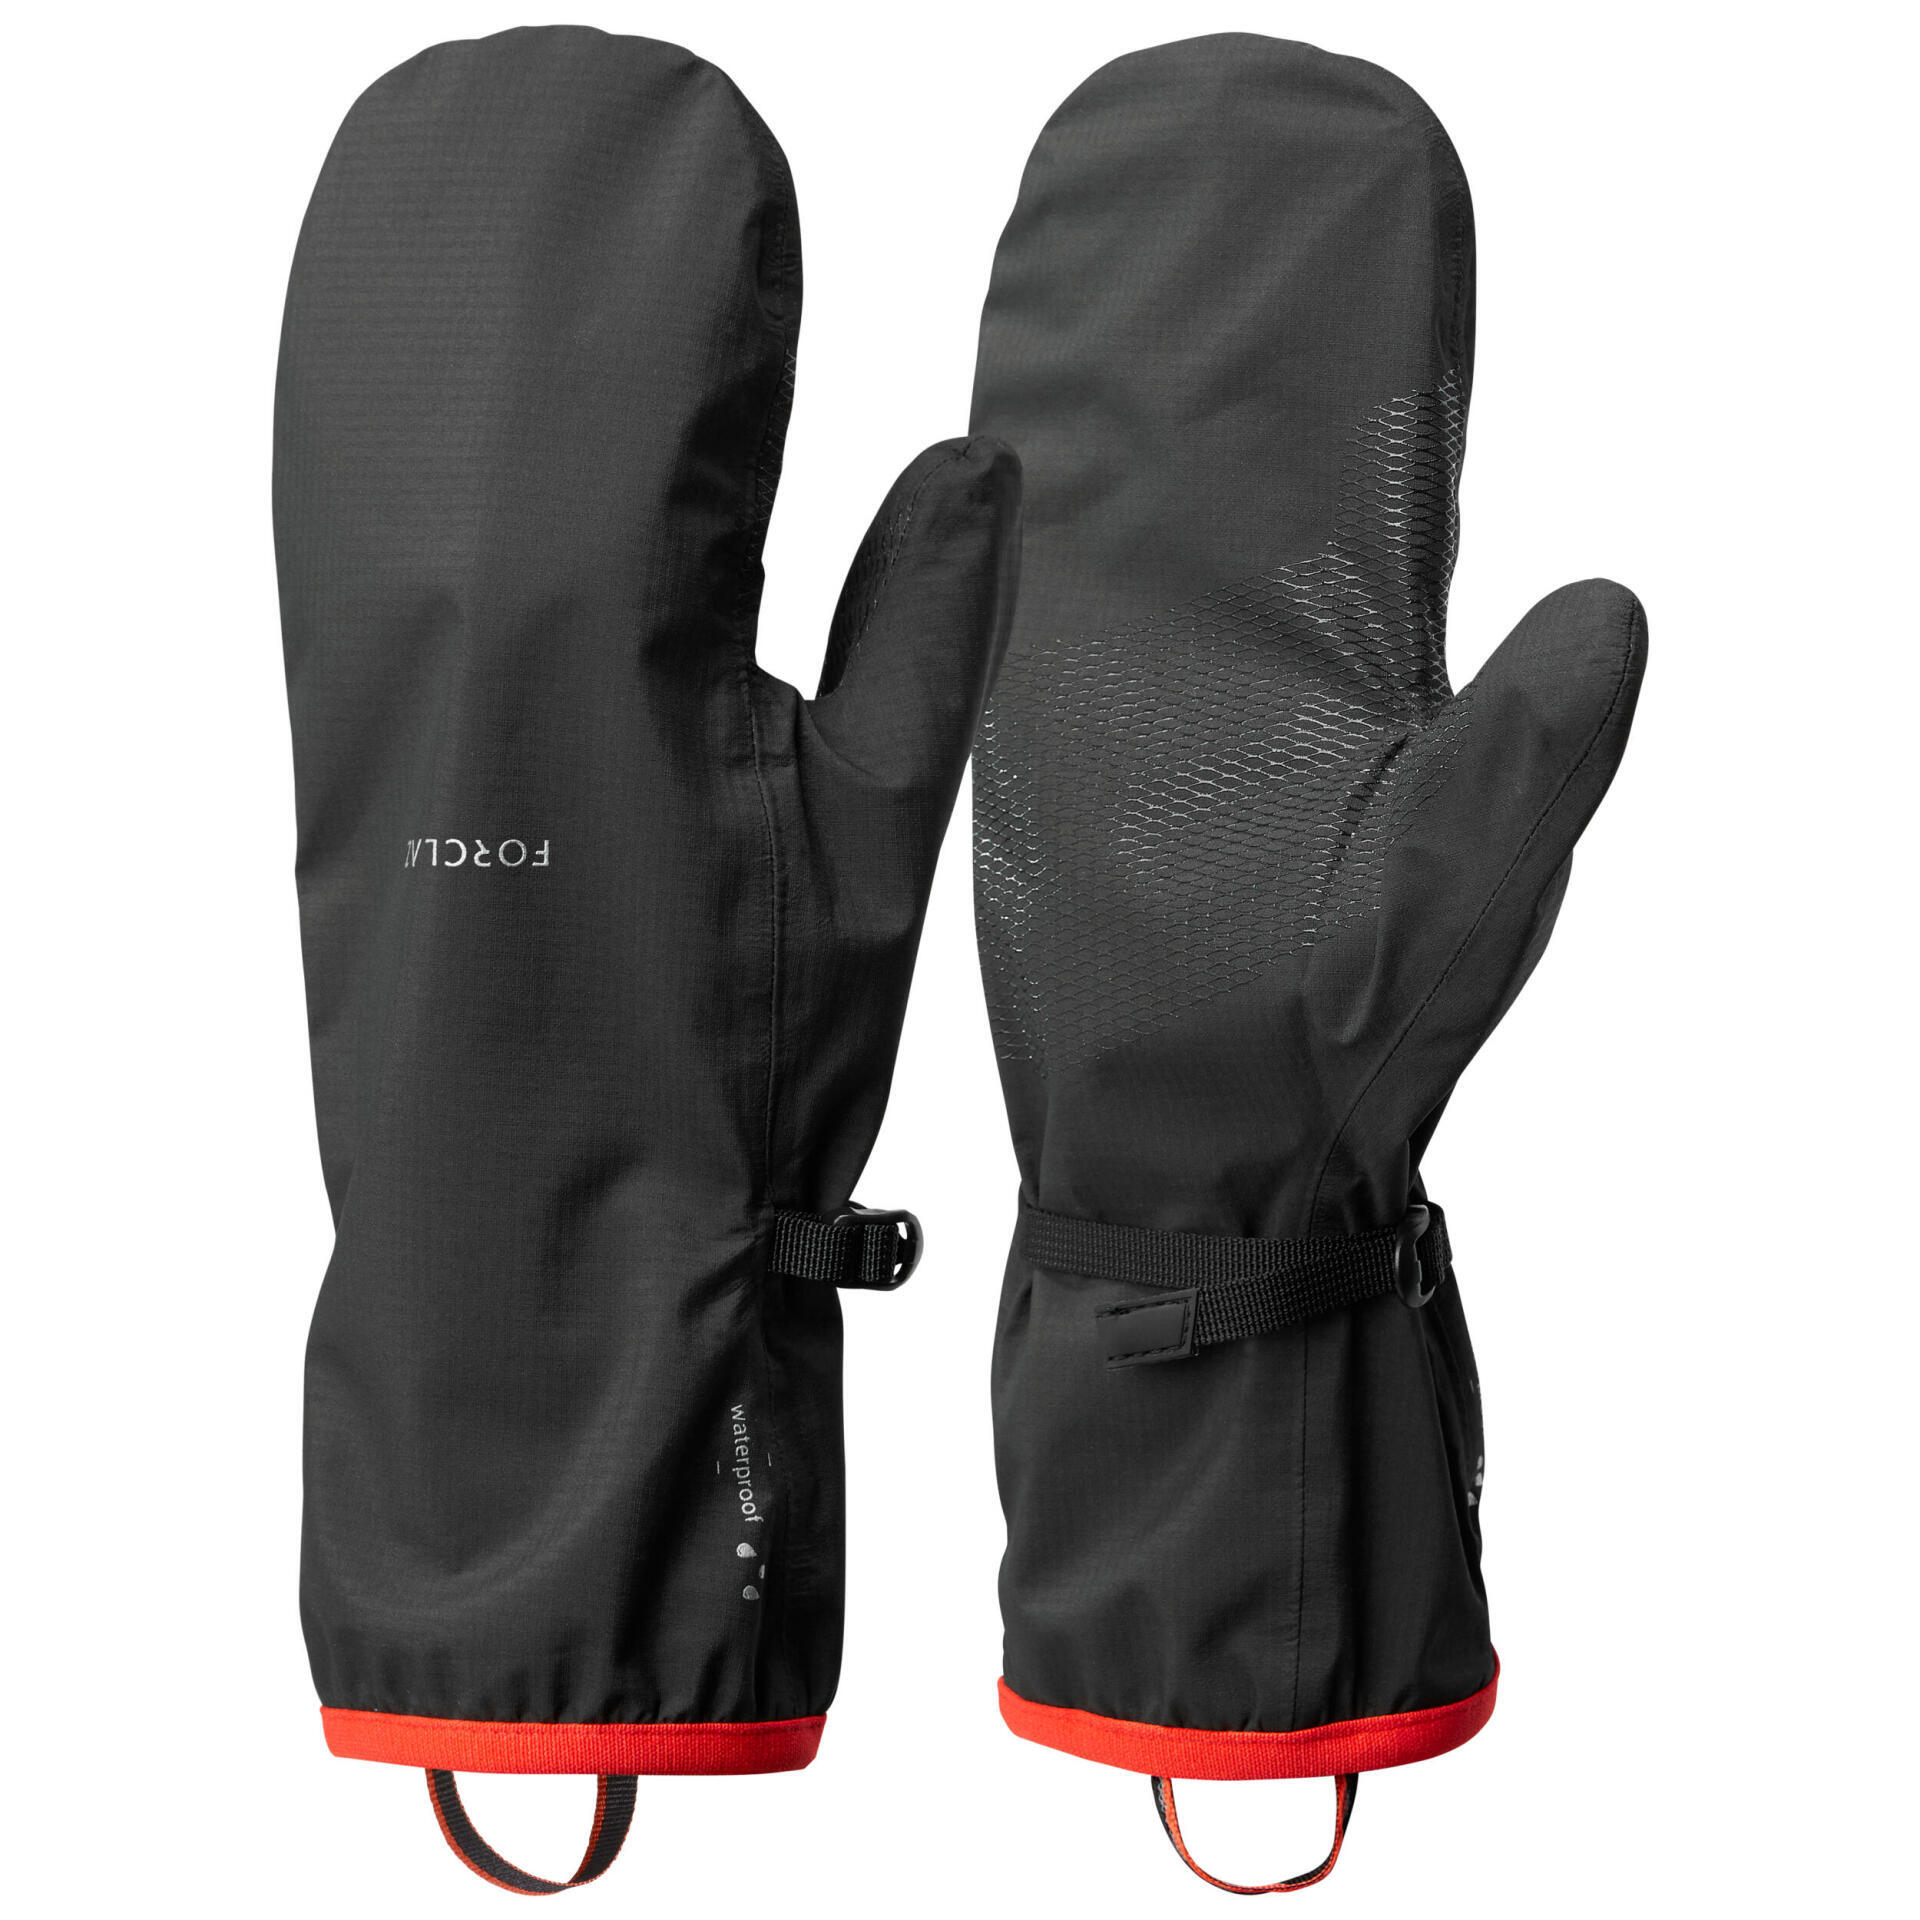 Forclaz waterproof over-gloves